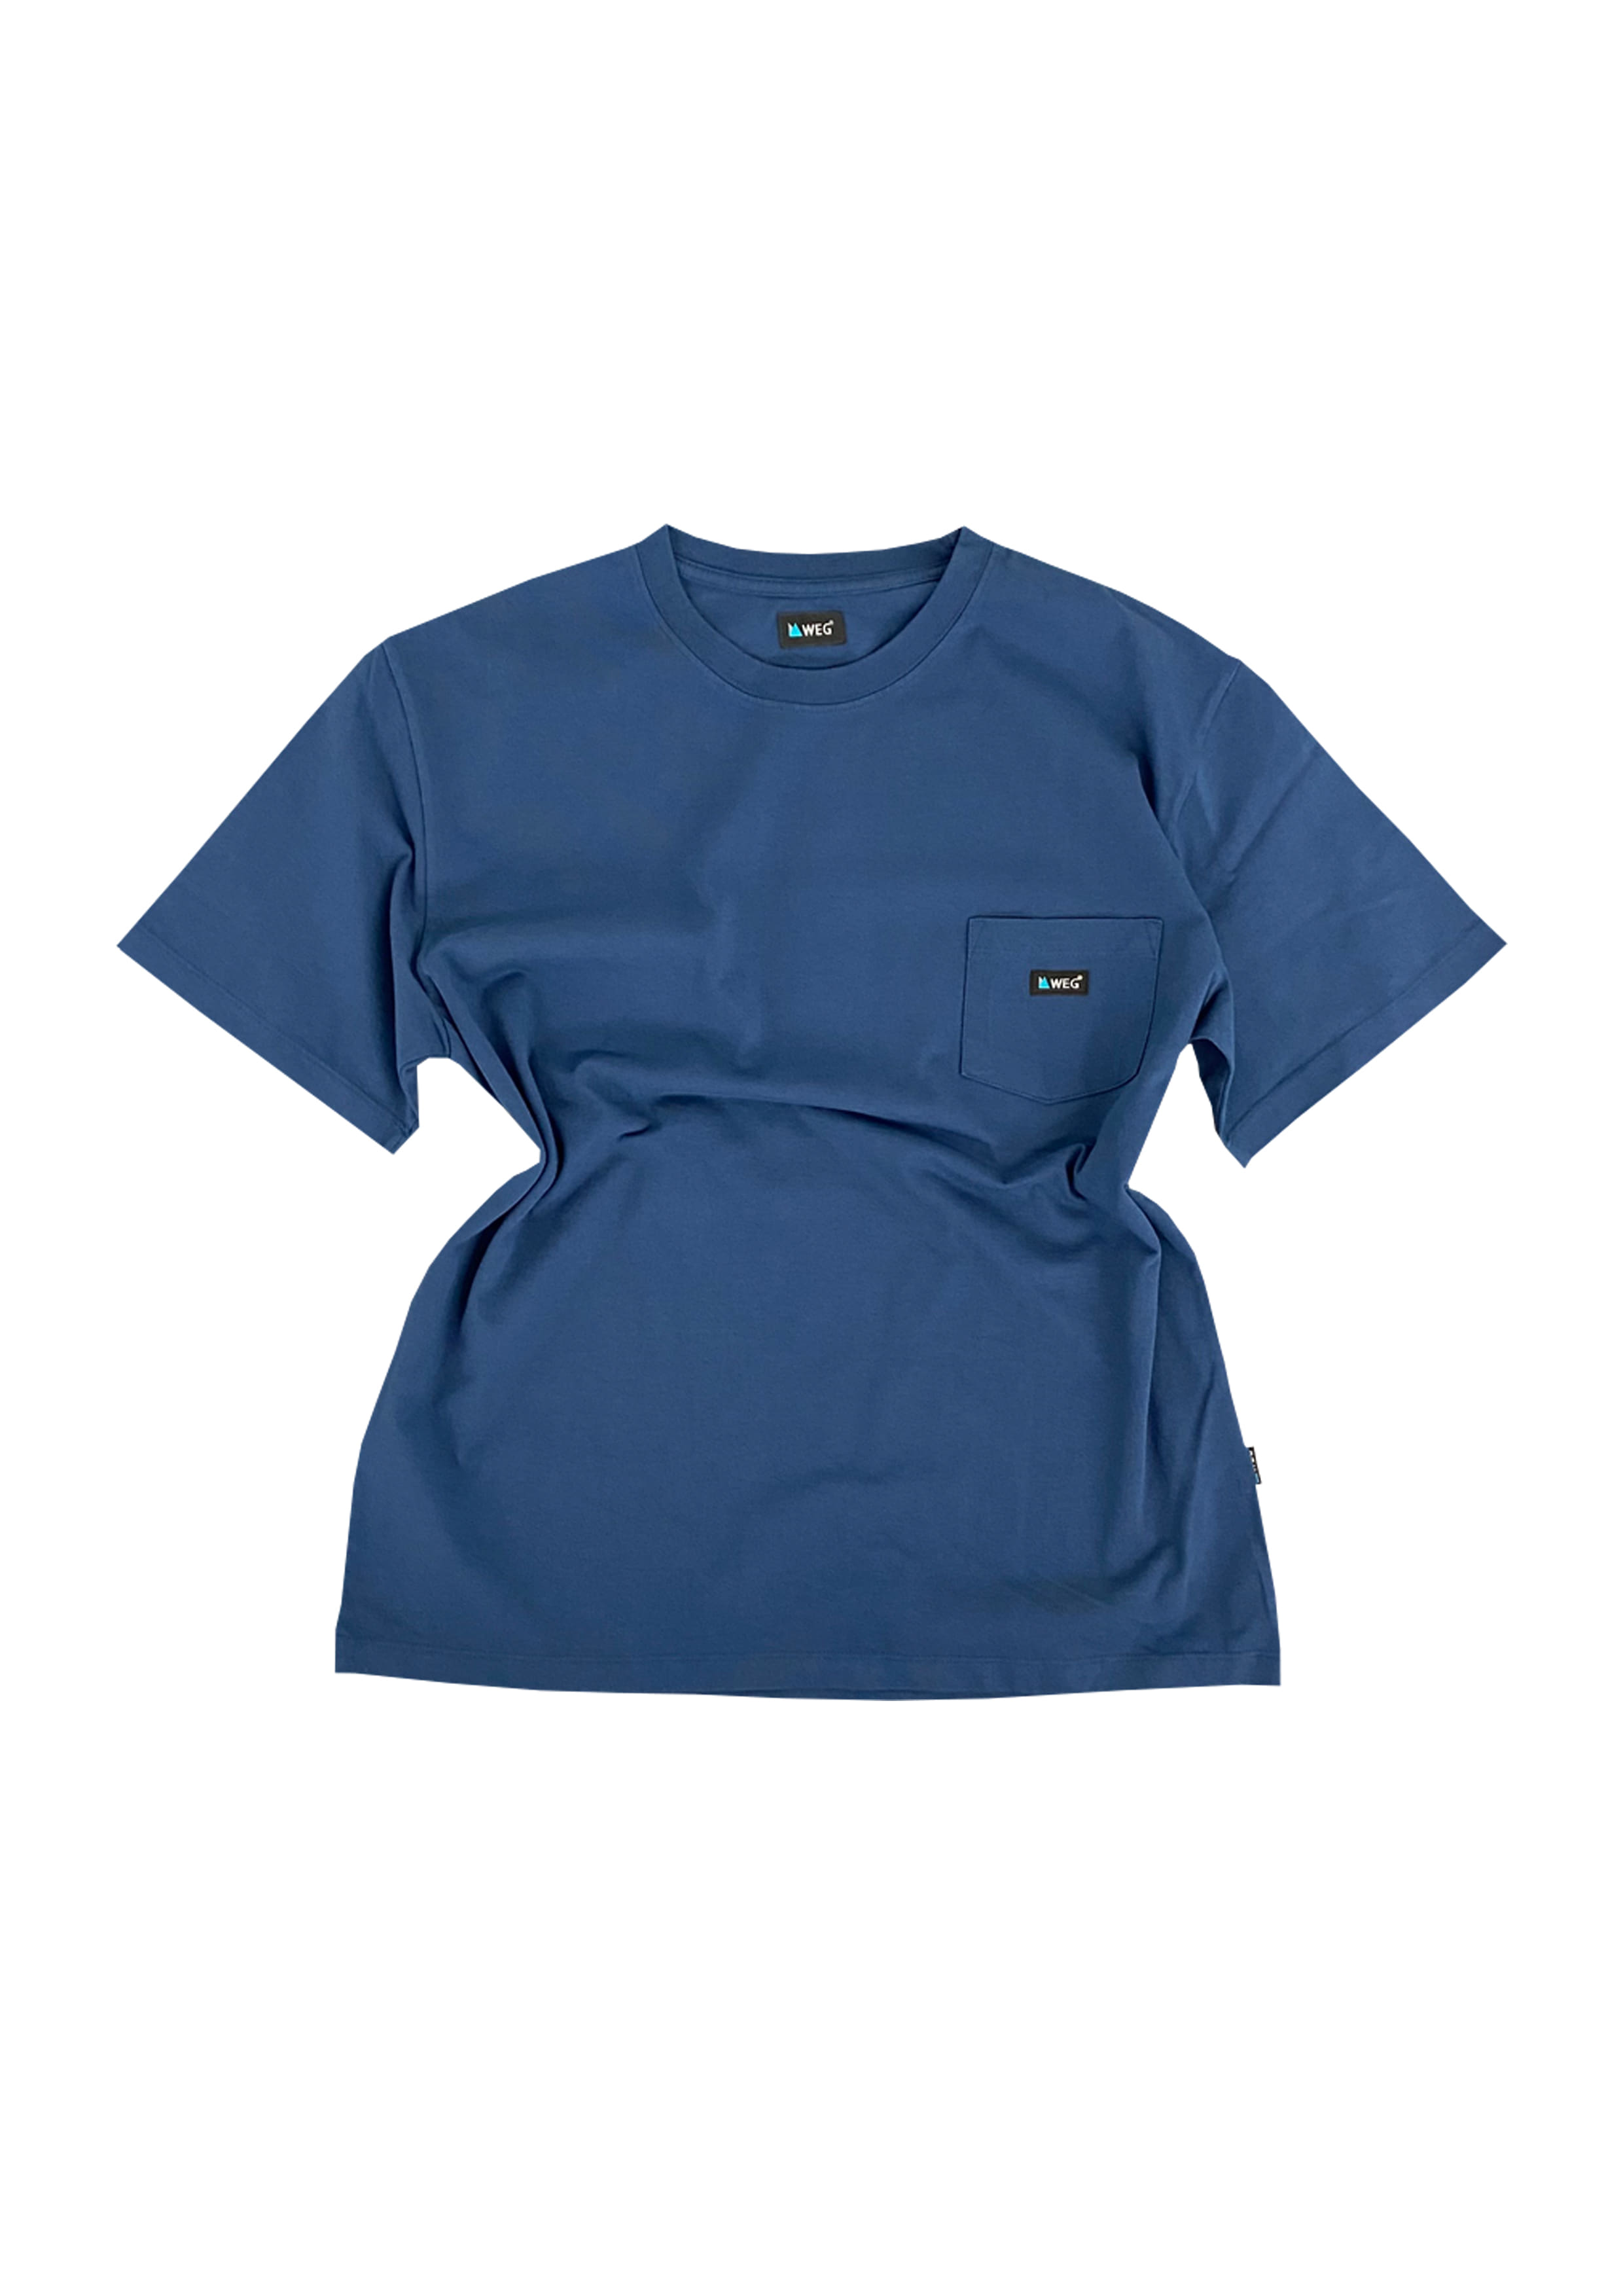 Pocket T-Shirt (Blue)